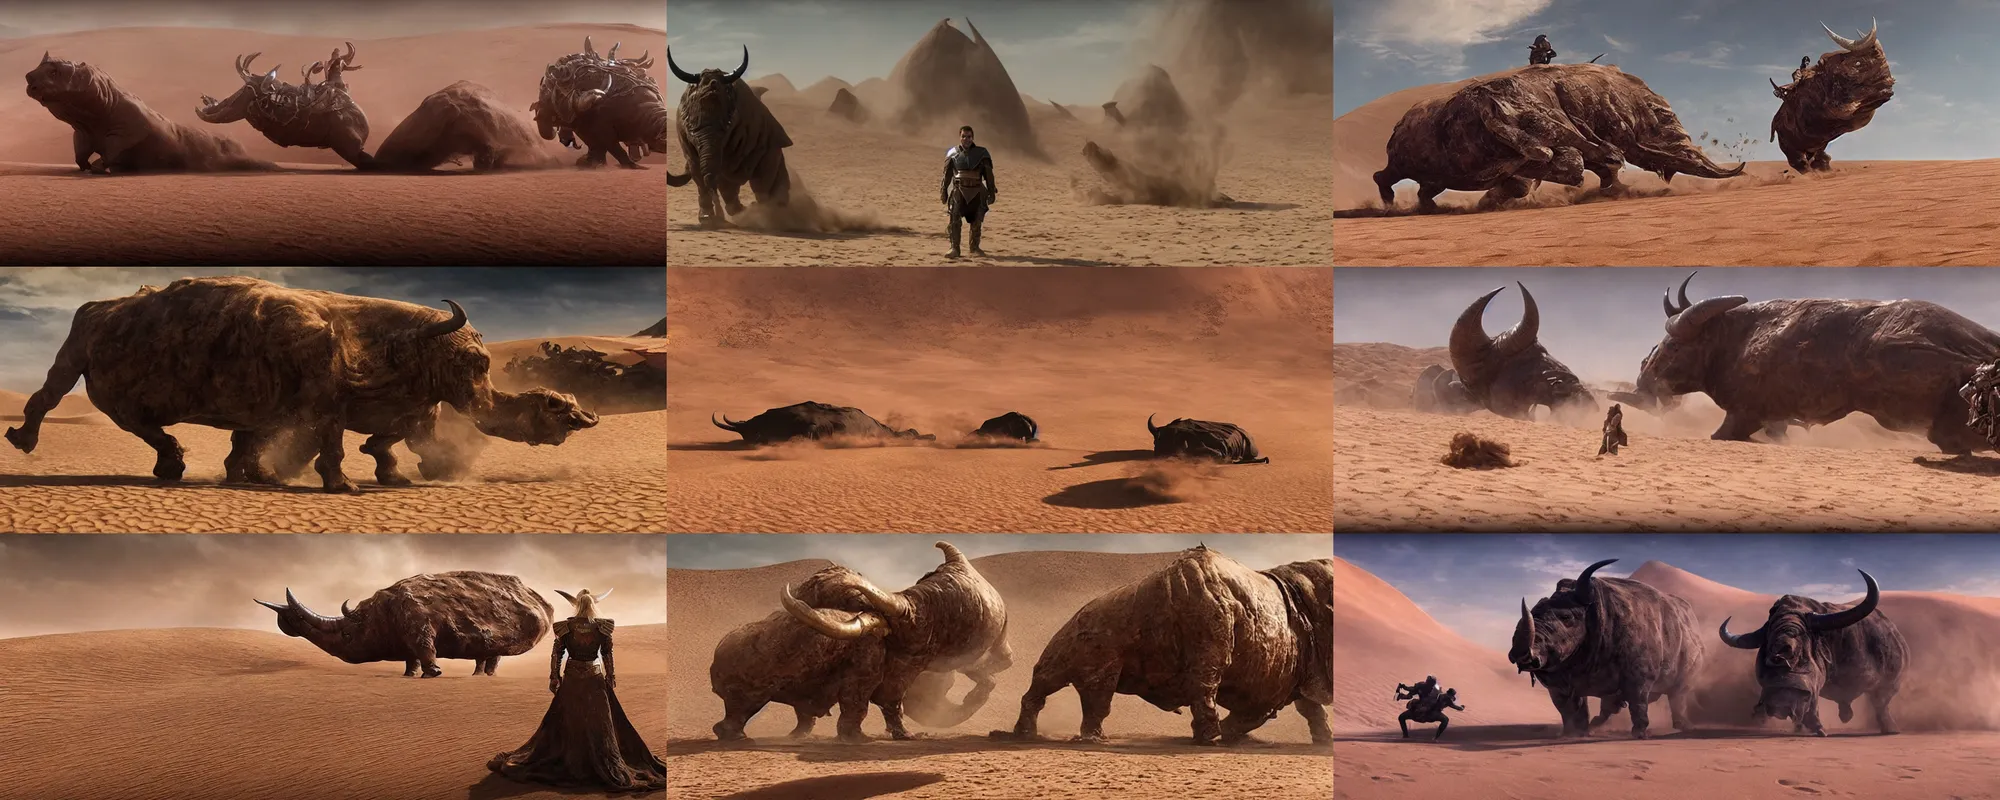 Prompt: a screenshot from dune movie, desert landscape, huge bull emerging from the sand